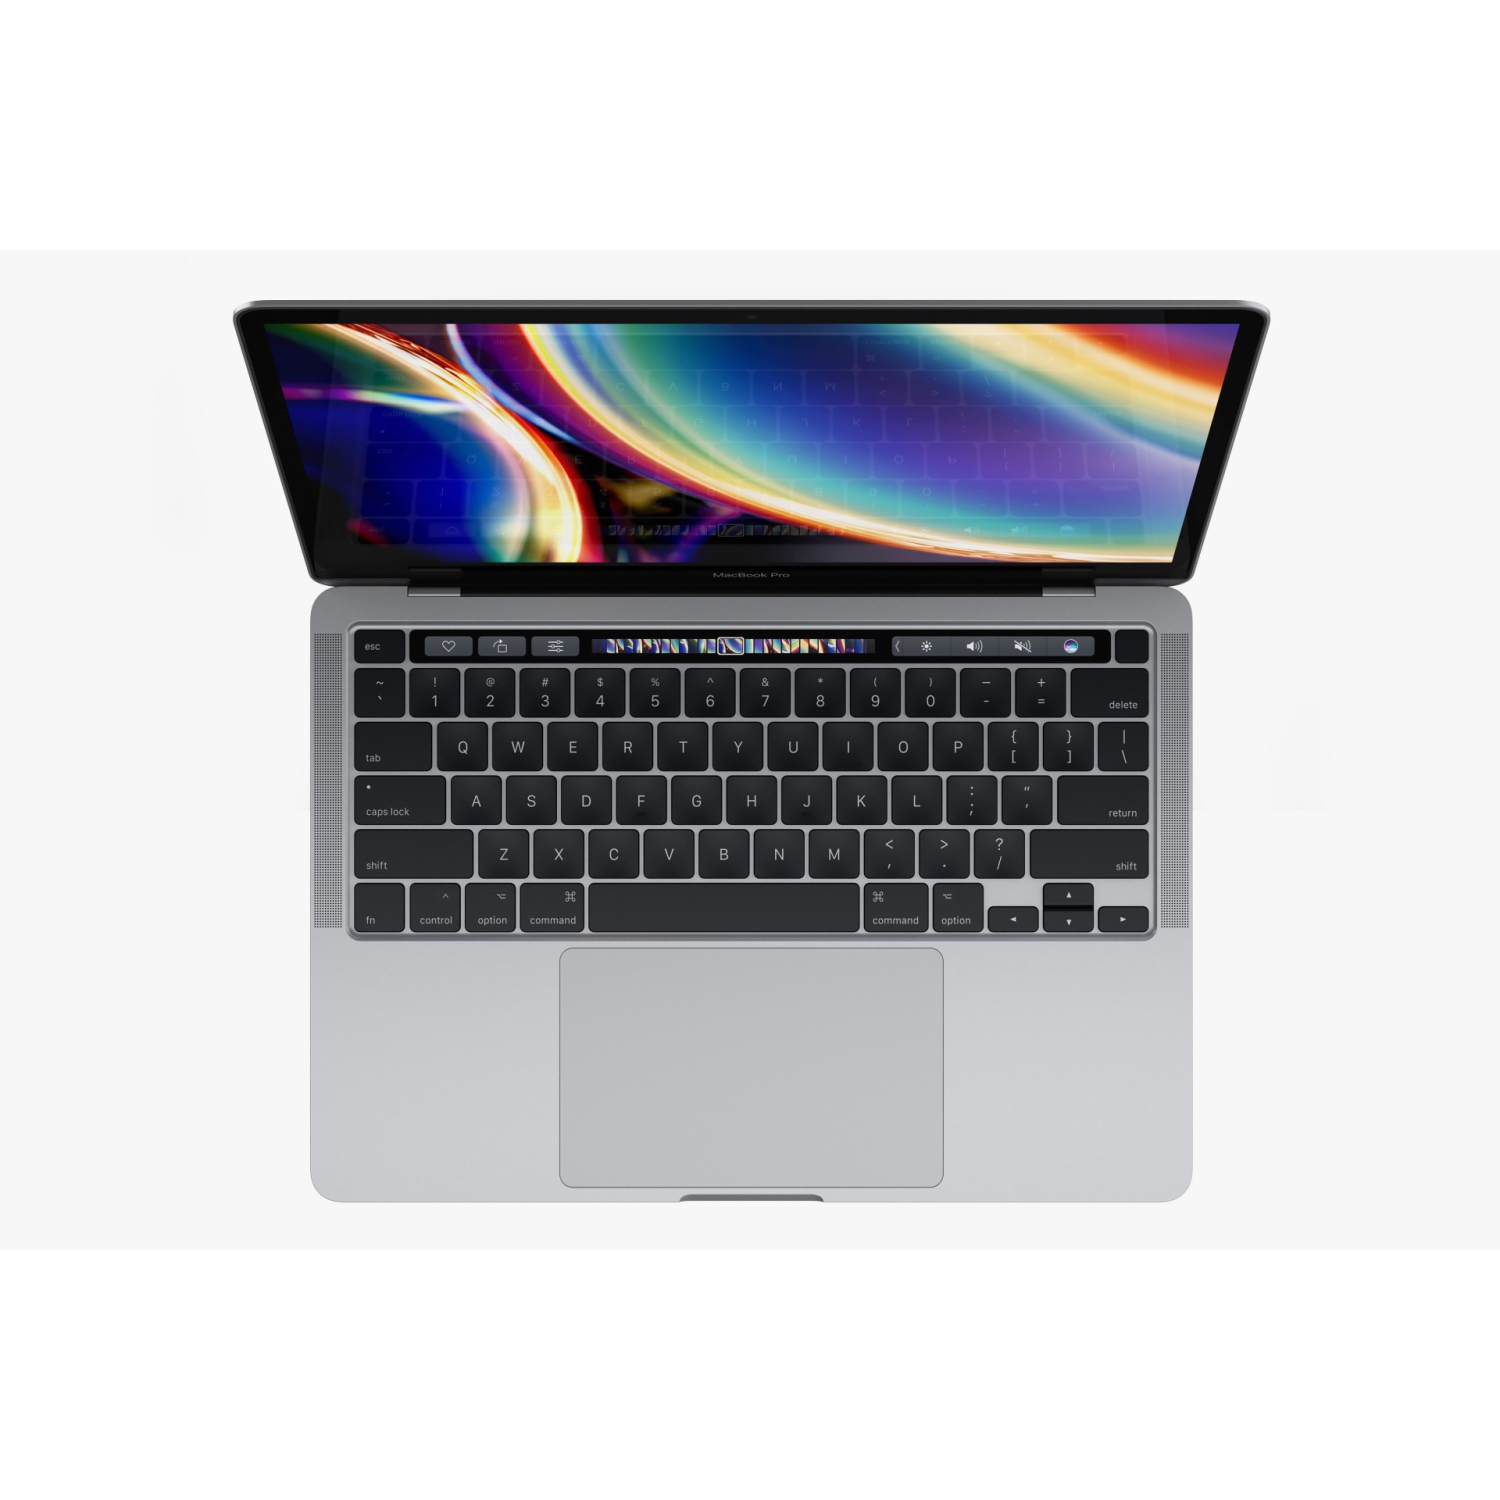 Refurbished(Good) - Apple MacBook Pro 13-Inch - 2020 Model - BTO/CTO - A2251 - Intel Core i7-1068NG7 CPU @ 2.30GHz - 32.0 GB RAM - NVMe:512GB